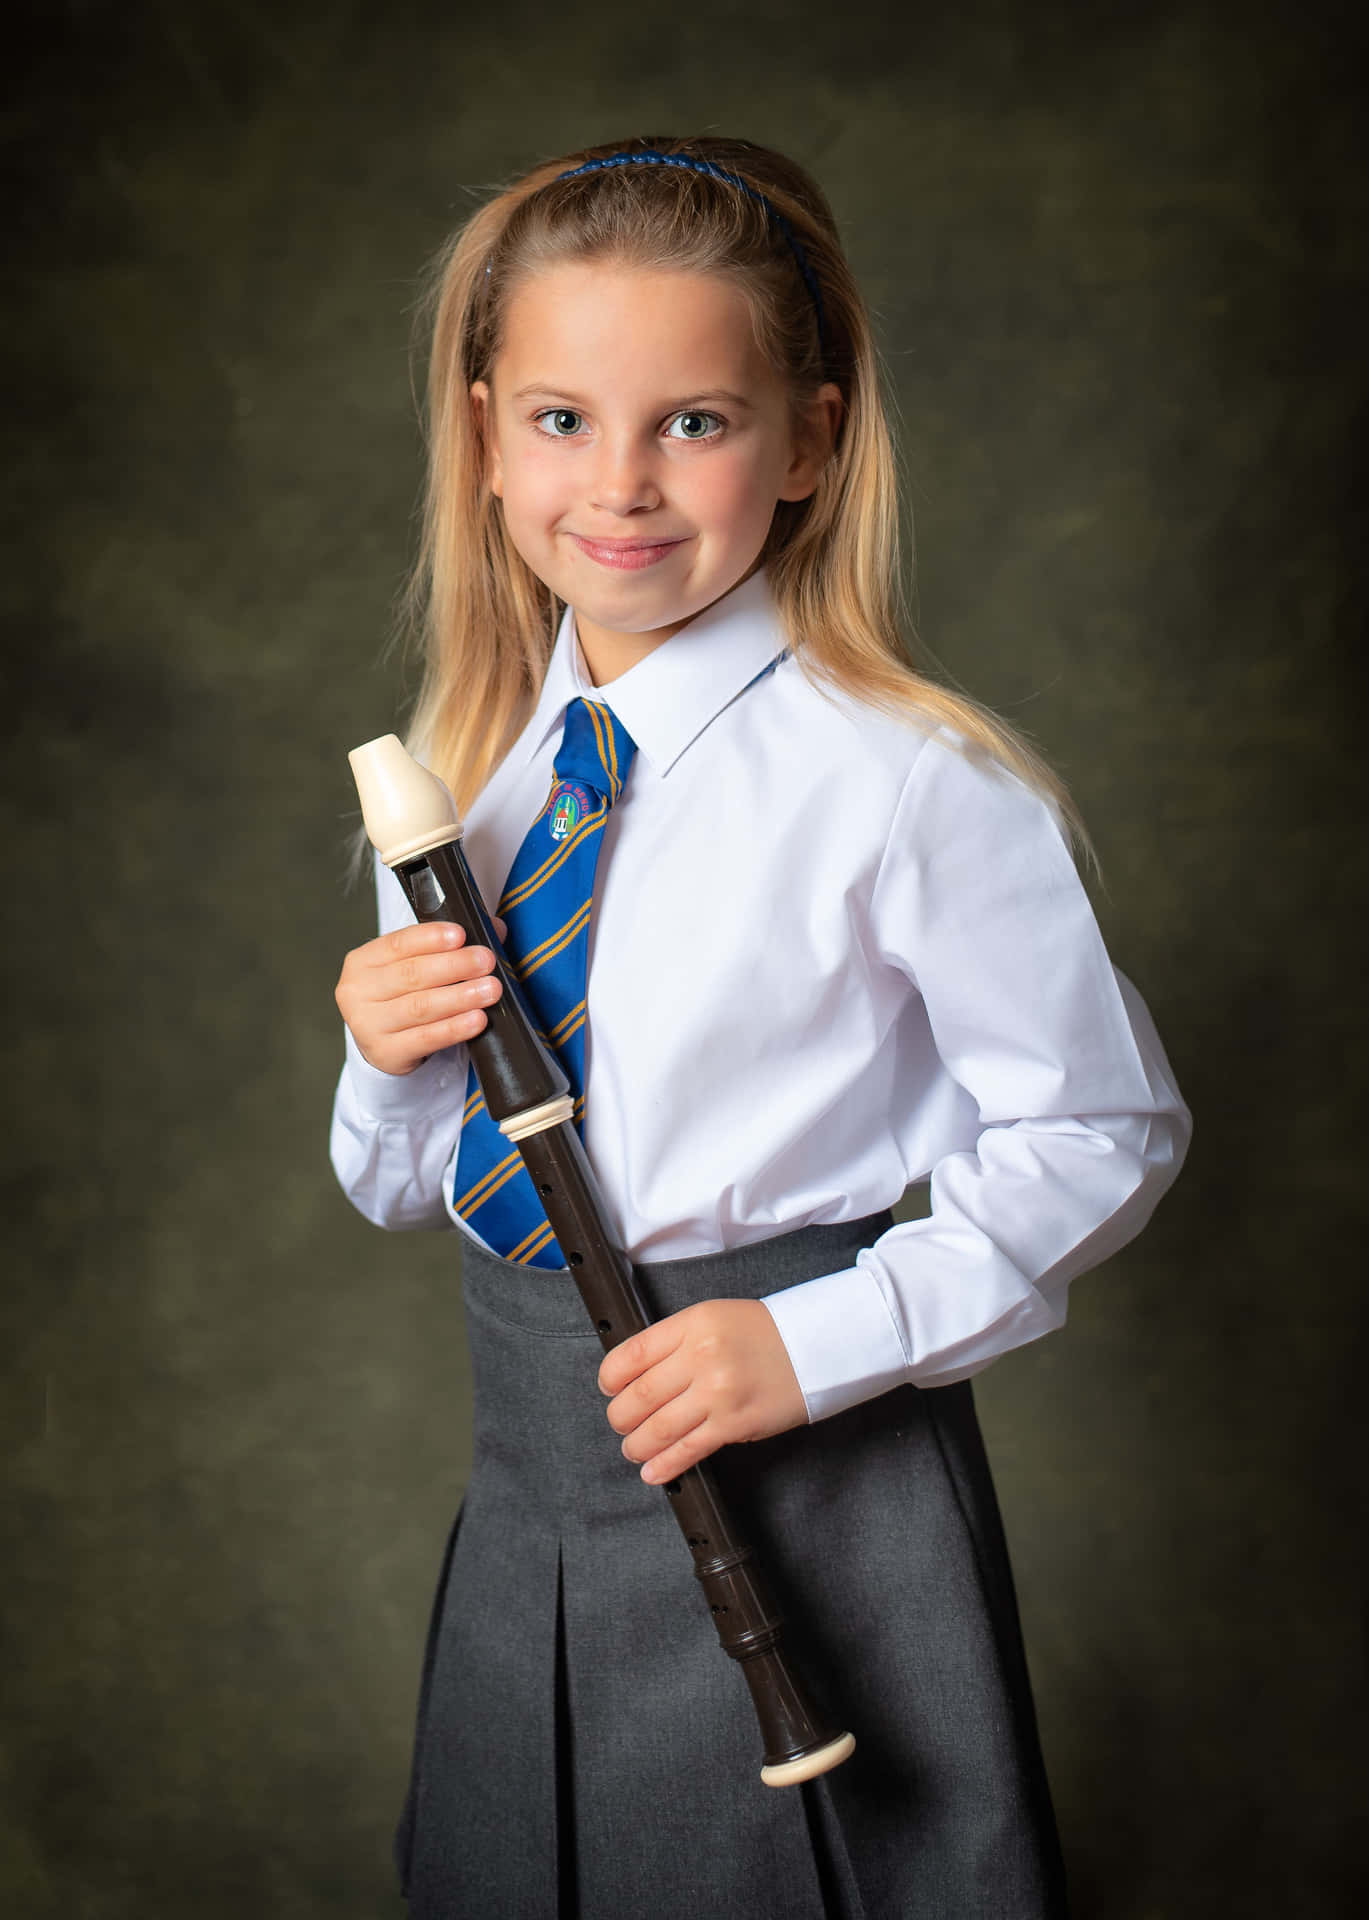 School Girl Cute Flute Picture